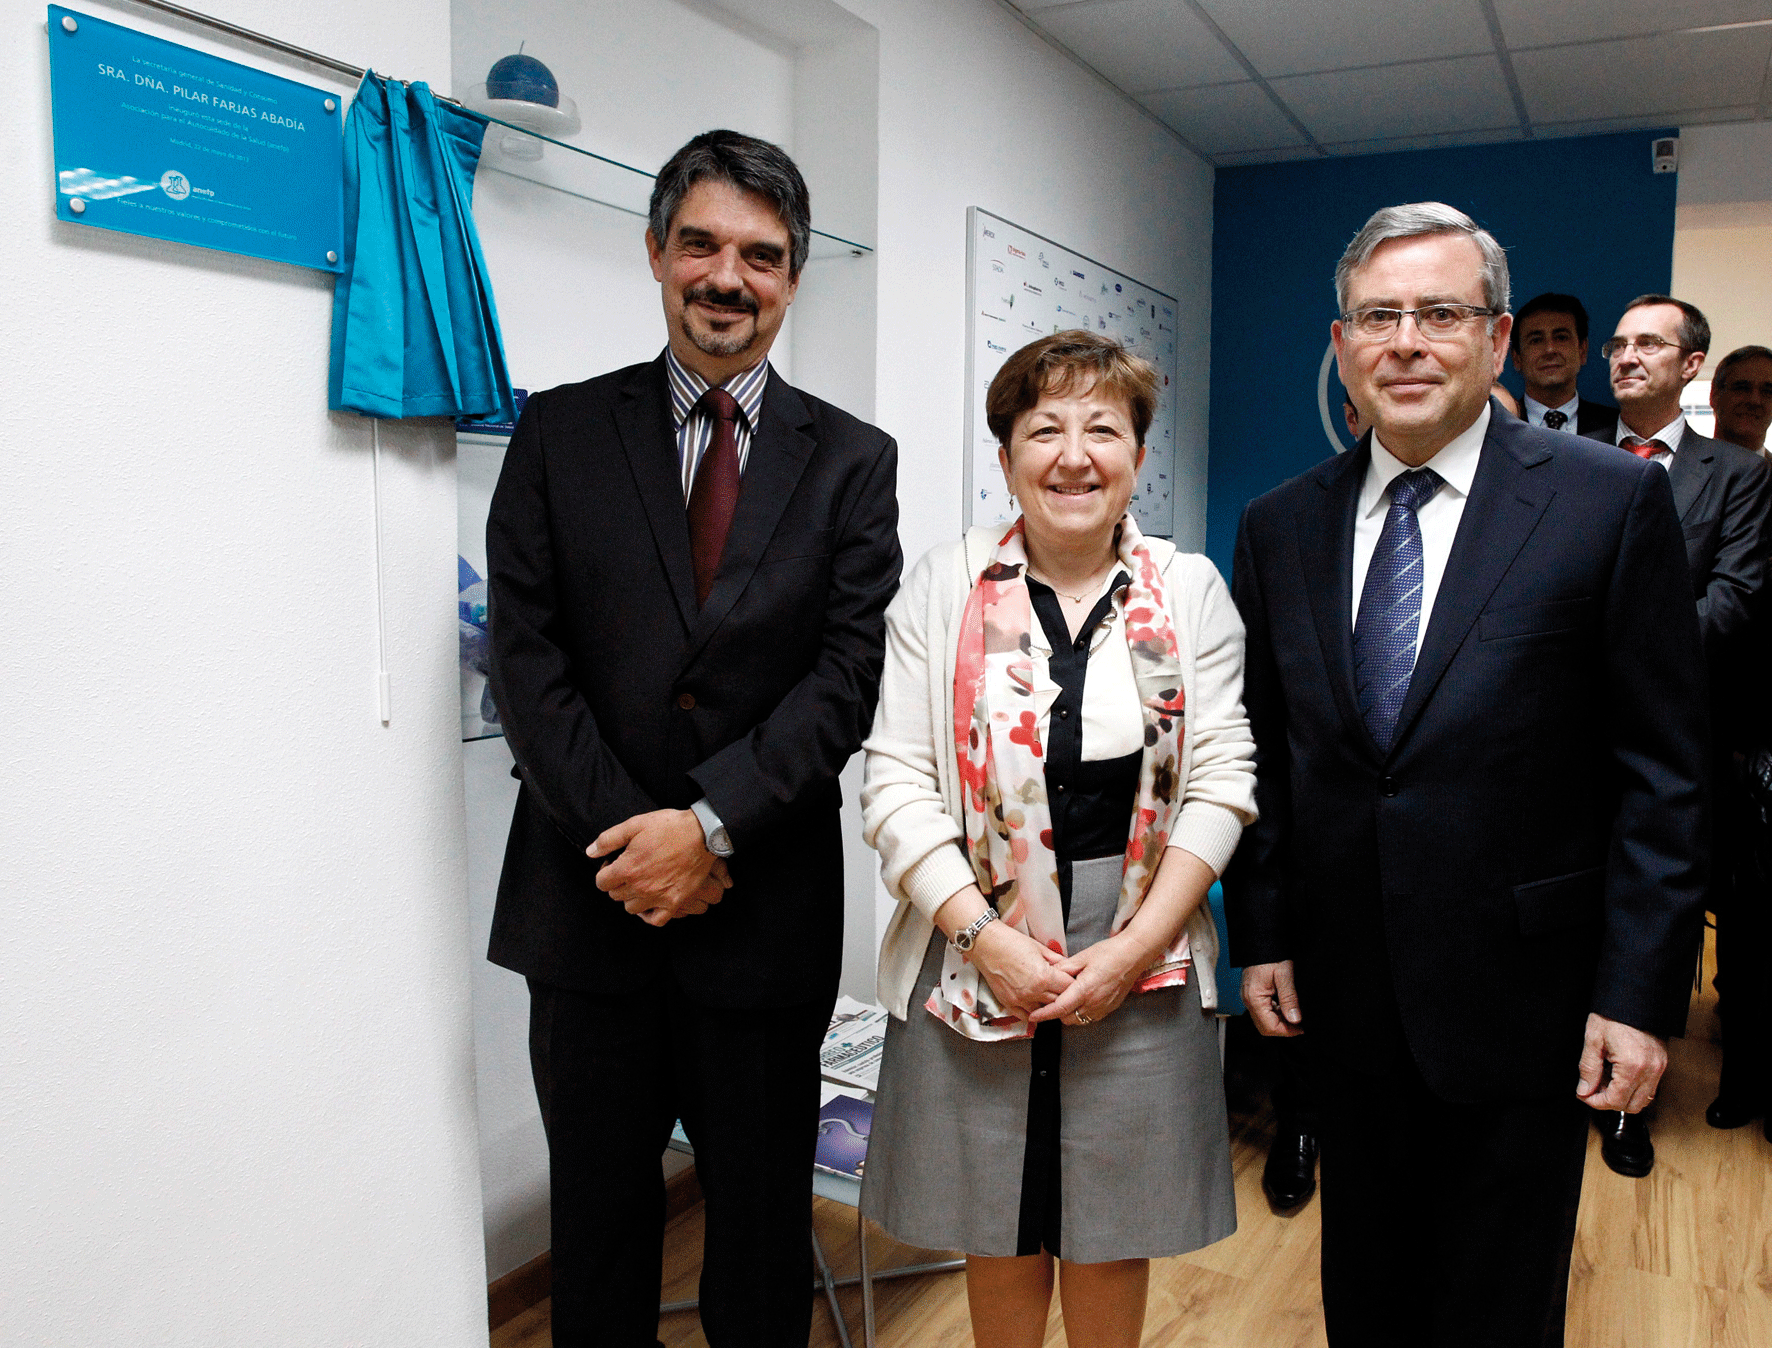 Pilar Farjas inaugura la remodelada sede de ANEFP